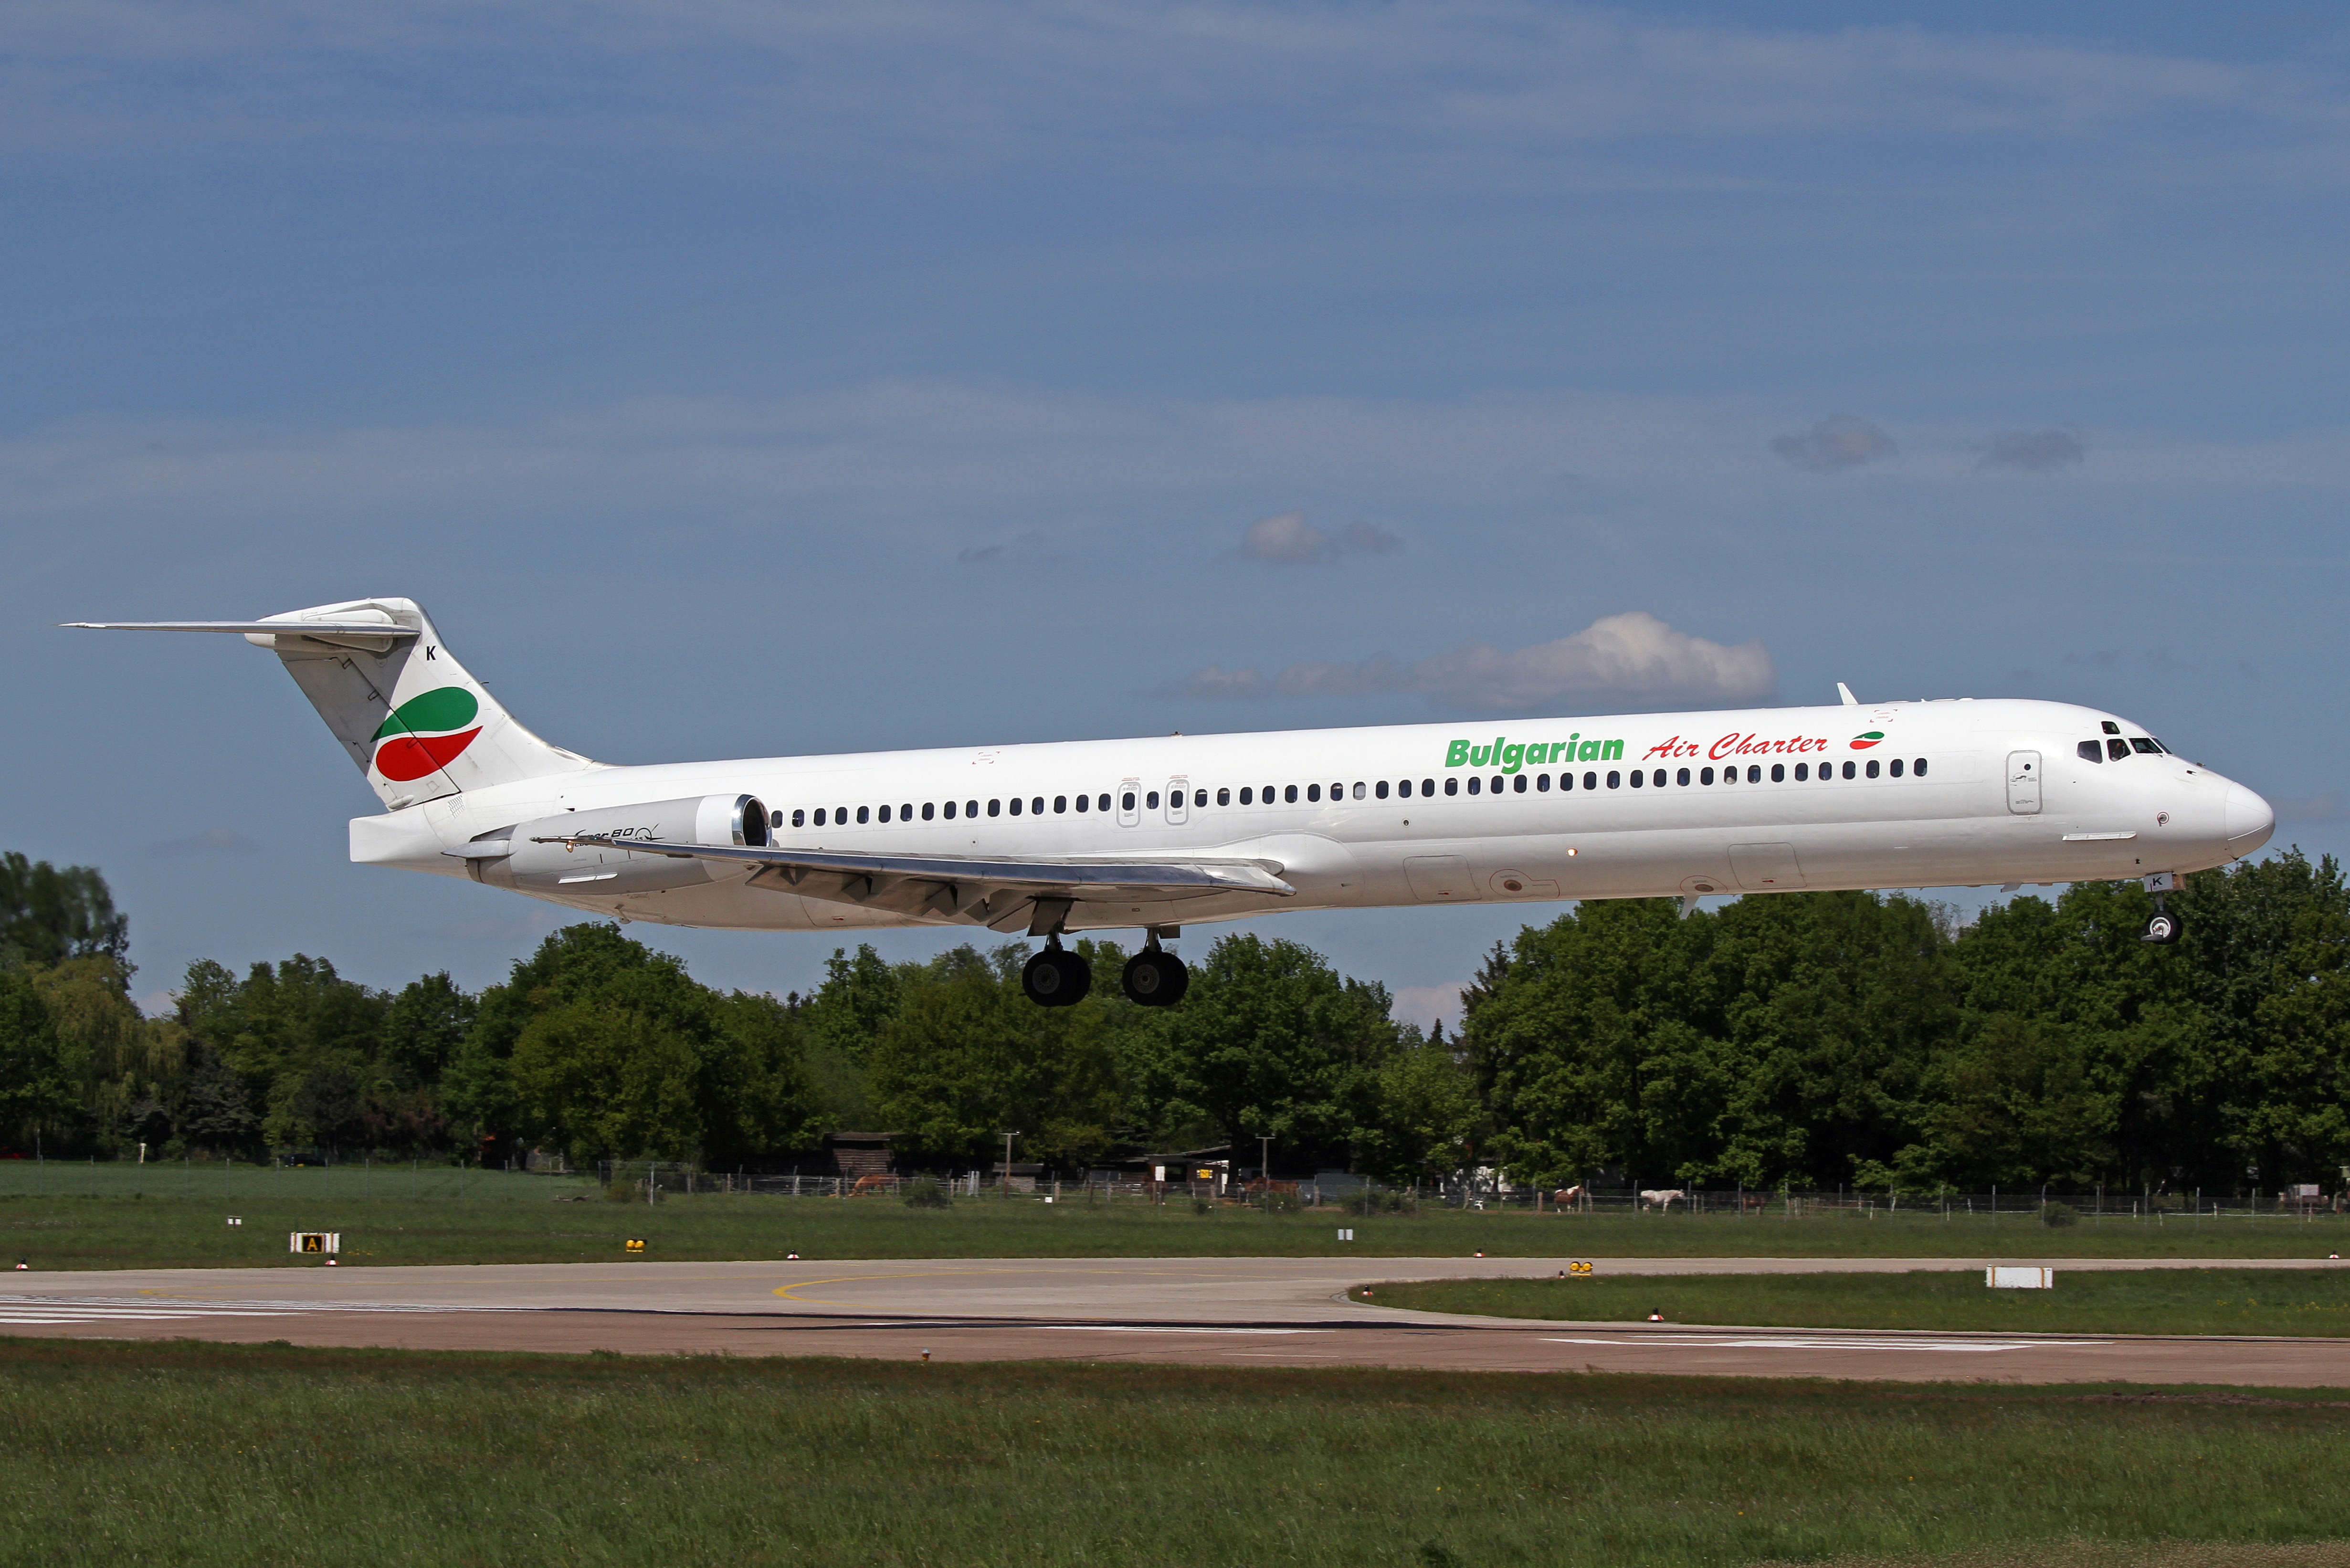 Bulgarian Air Charter take-off